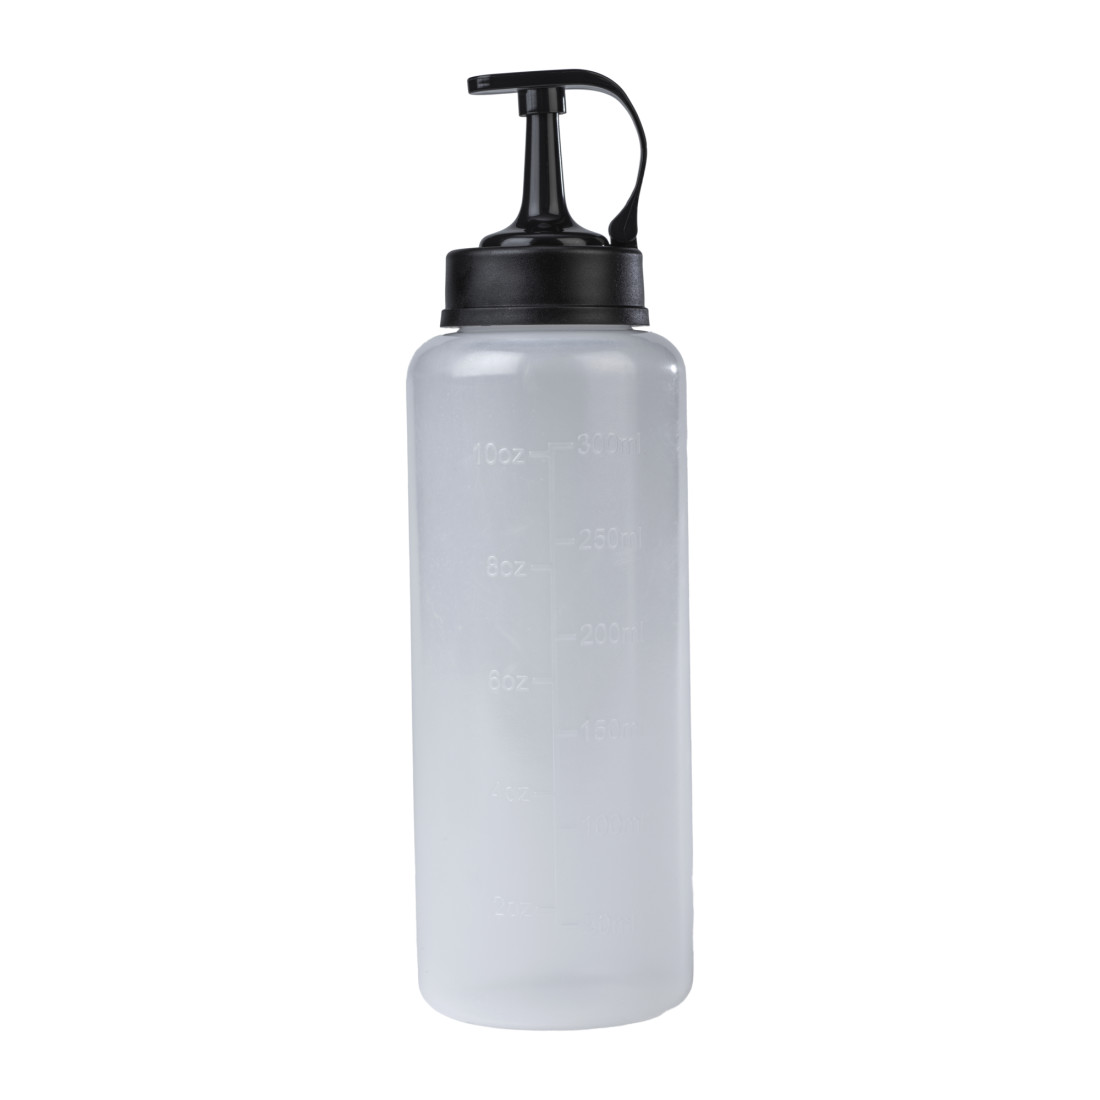 GoodCook ProFreshionals Plastic Dispenser Bottles - Clear - 2 Pack